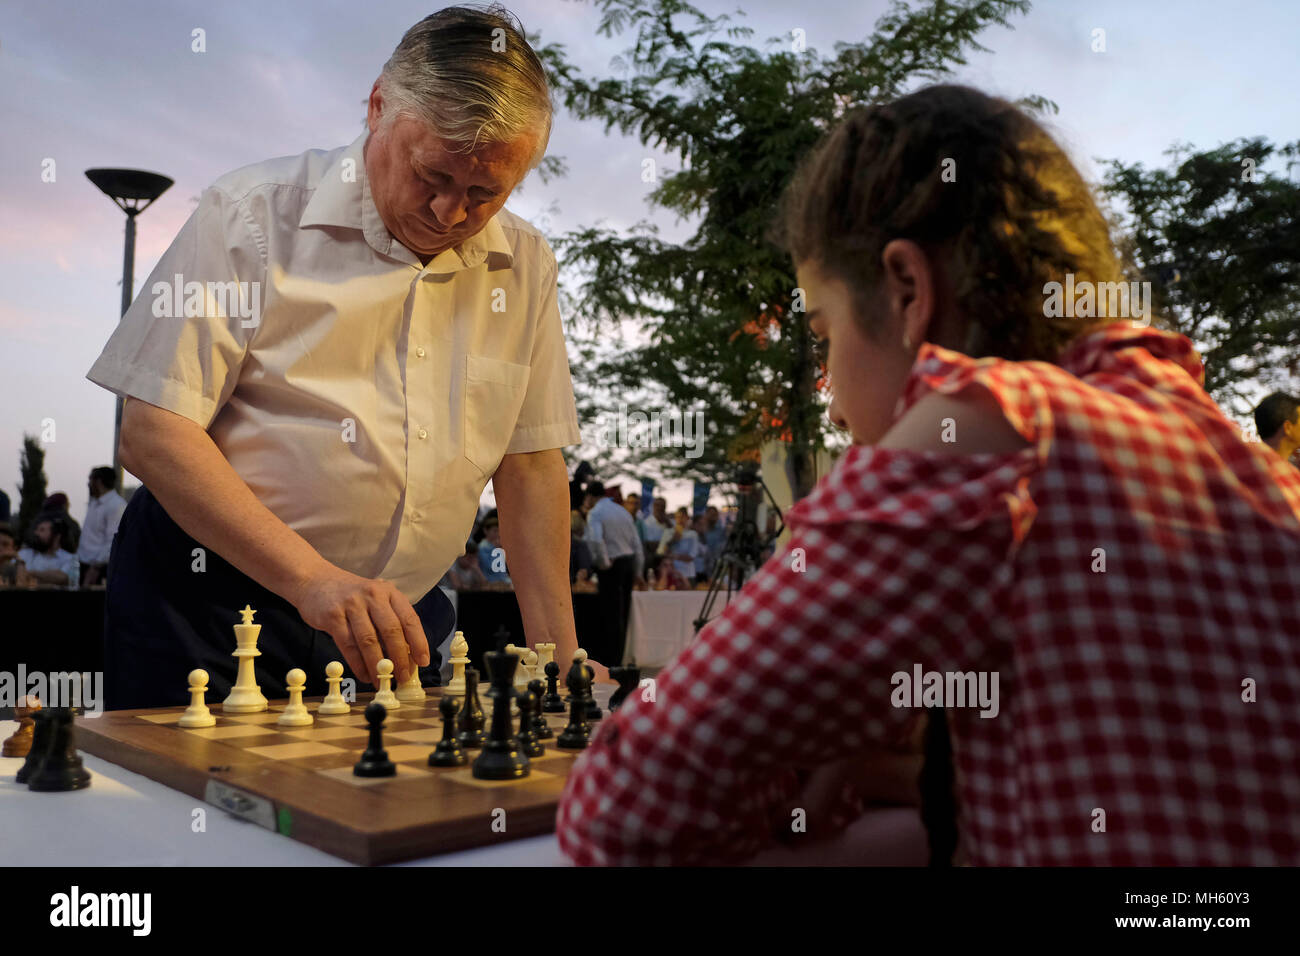 Russian Former Chess Champion Karpov Unable To Get U.S. Visa